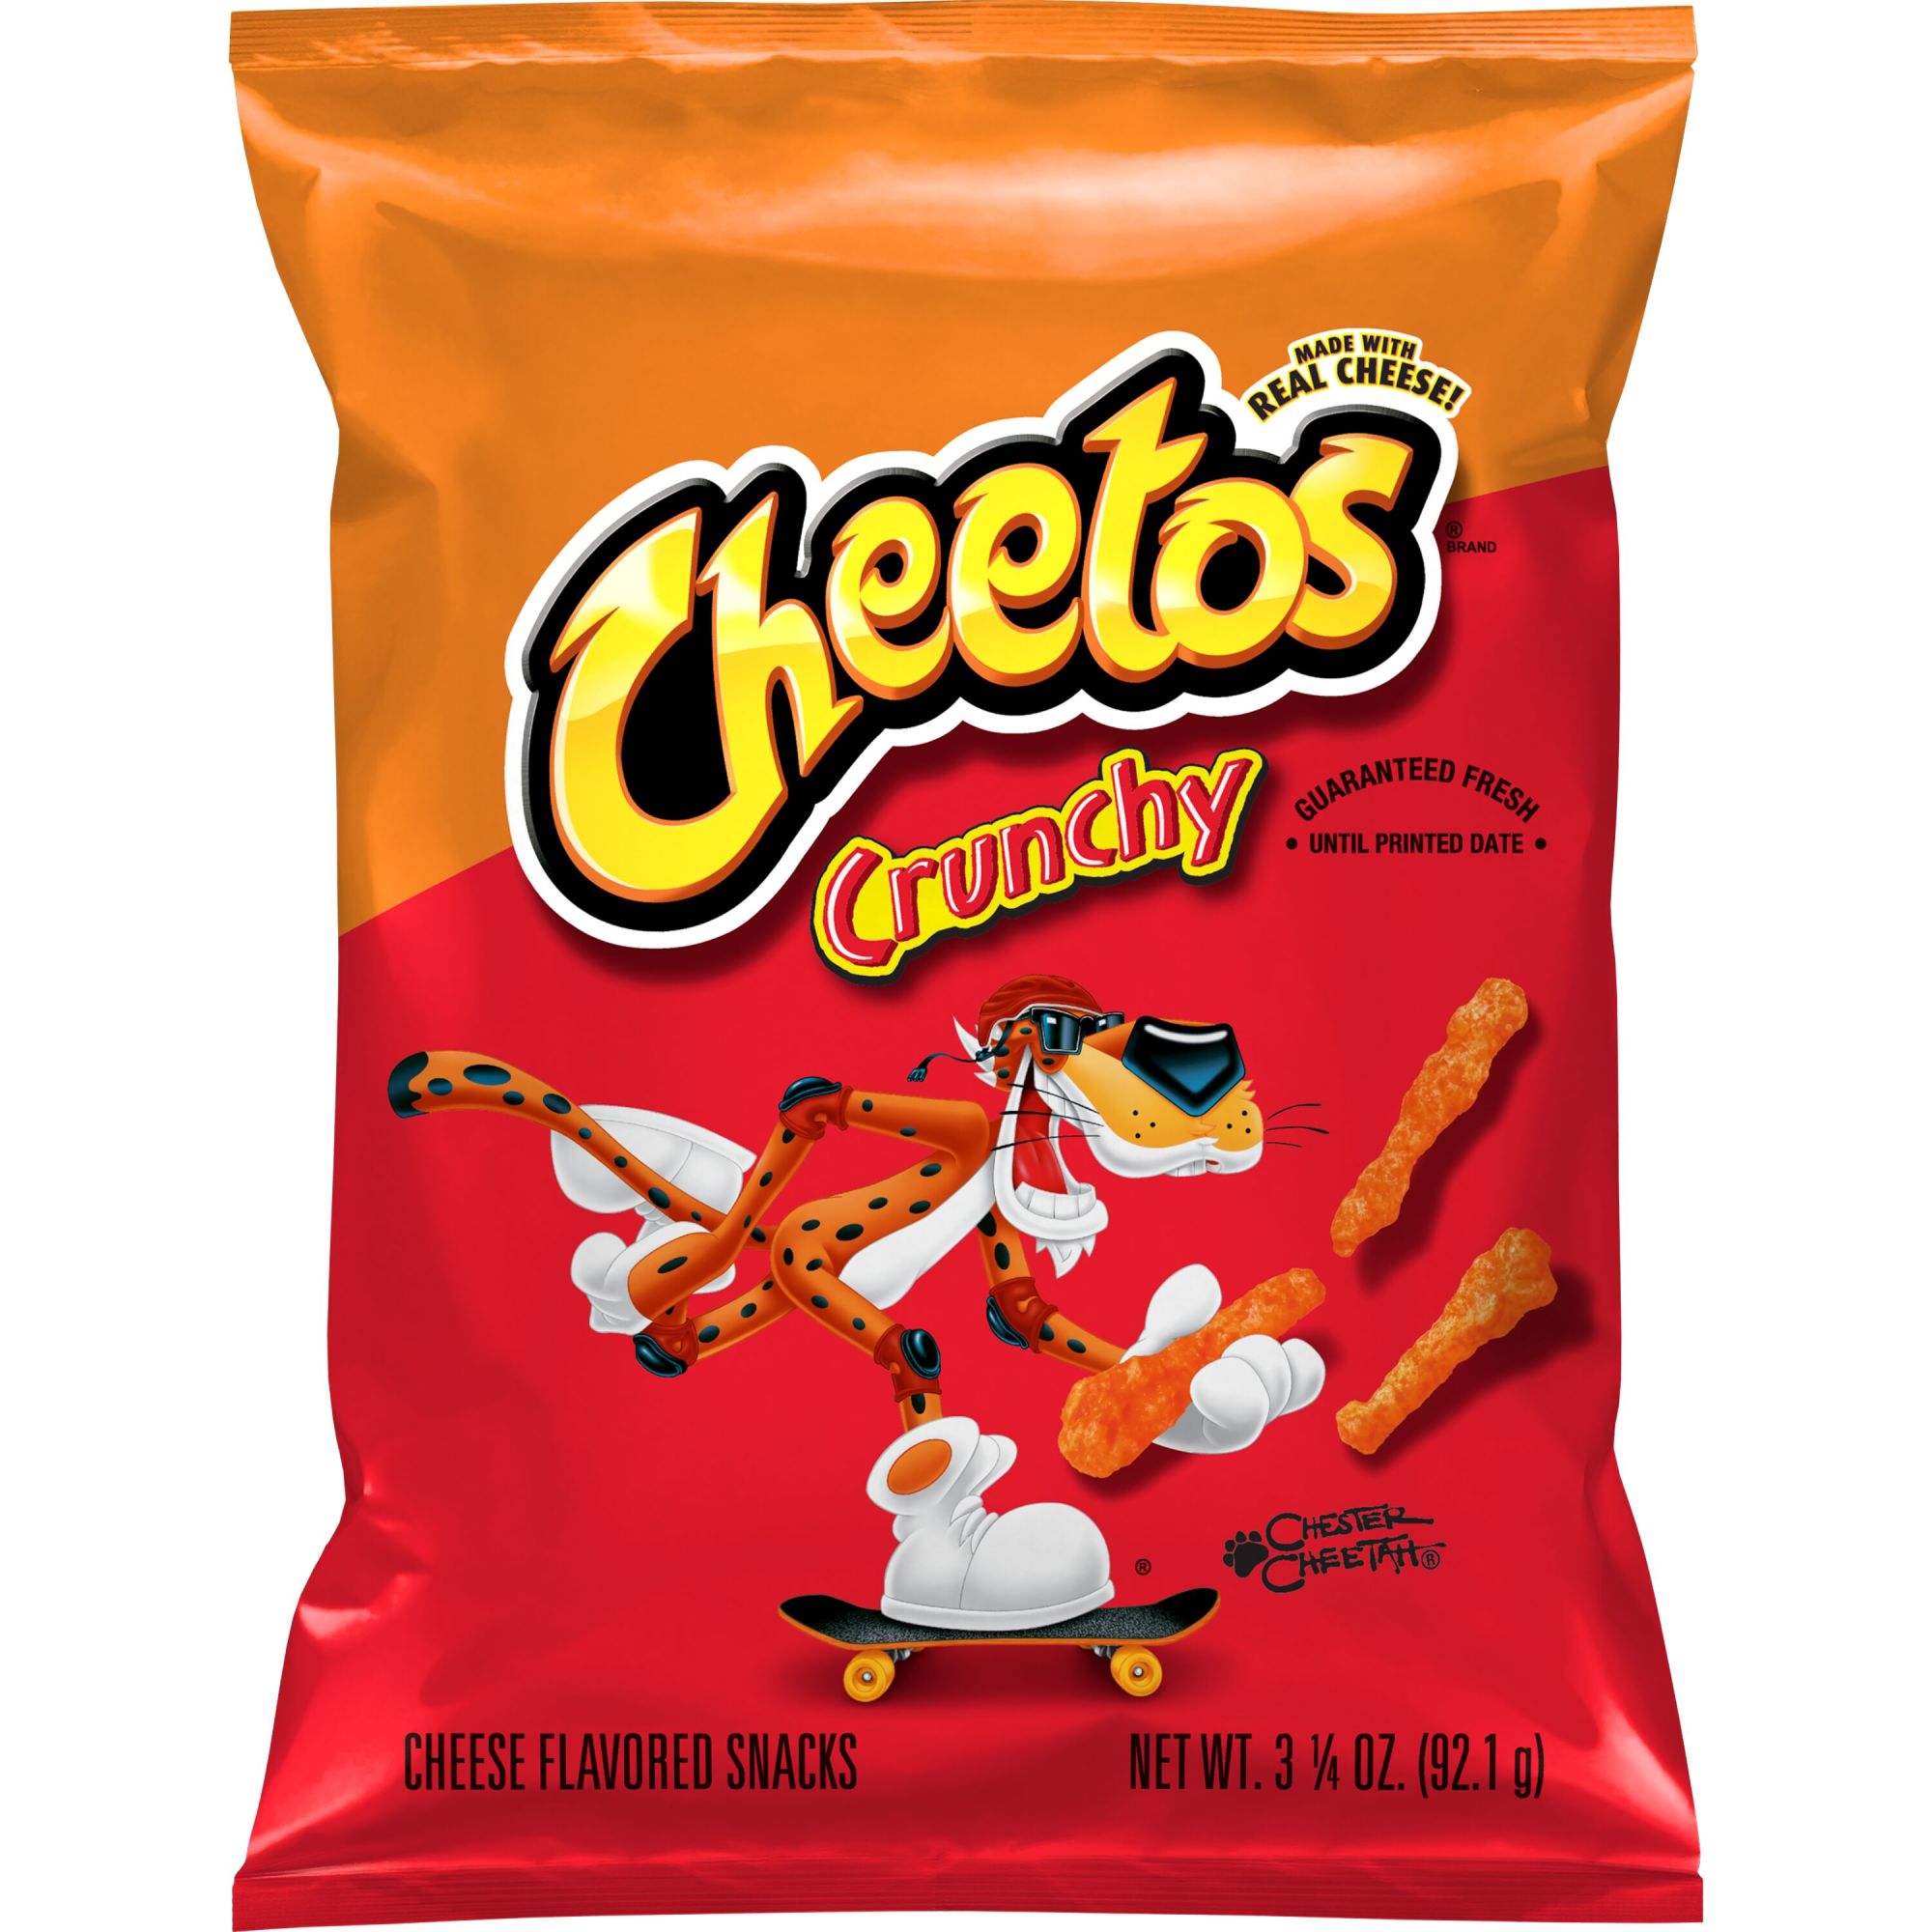 Cheetos Crunchy Cheese Flavored Snacks. 3.25 oz